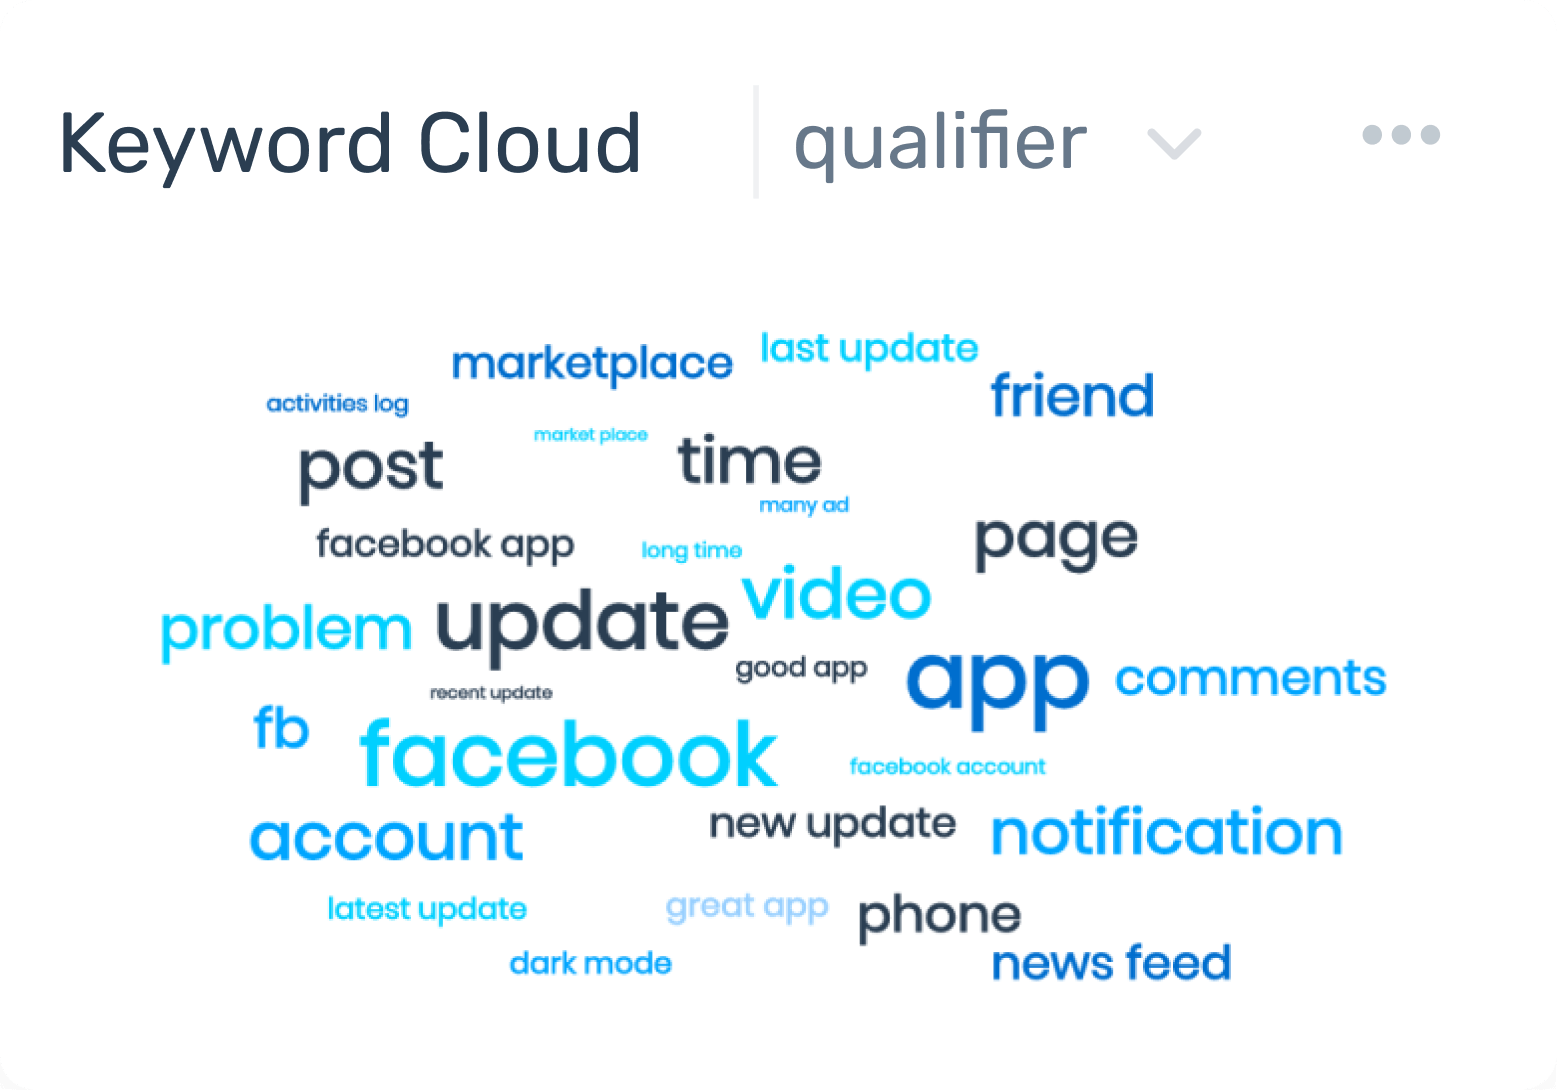 Keyword cloud. Prominent keywords include: facebook, update, video, notification.